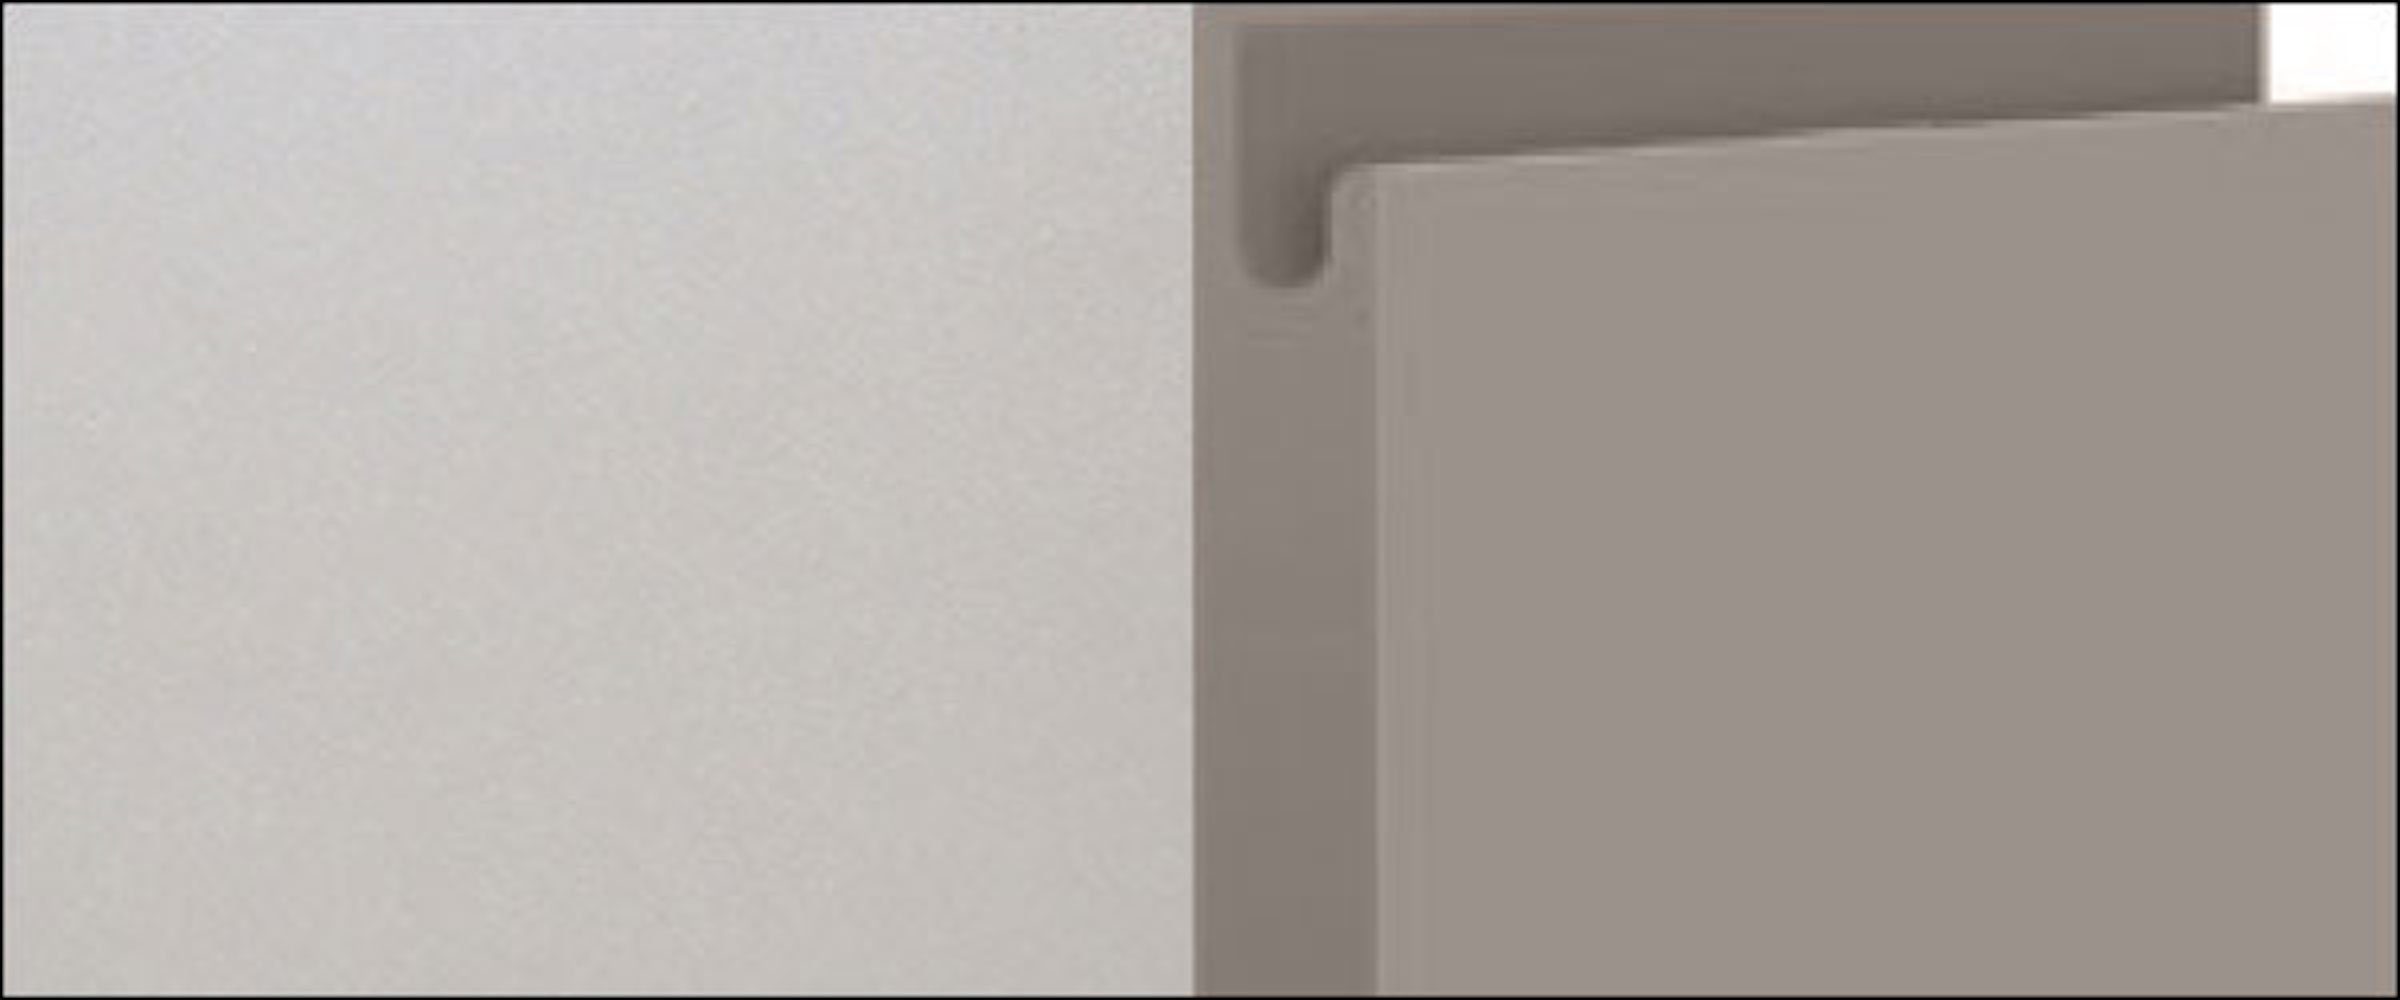 Korbauszug Feldmann-Wohnen wählbar stone Avellino grifflos Front-, & grey 15cm Acryl Unterschrank Ausführung matt Korpusfarbe